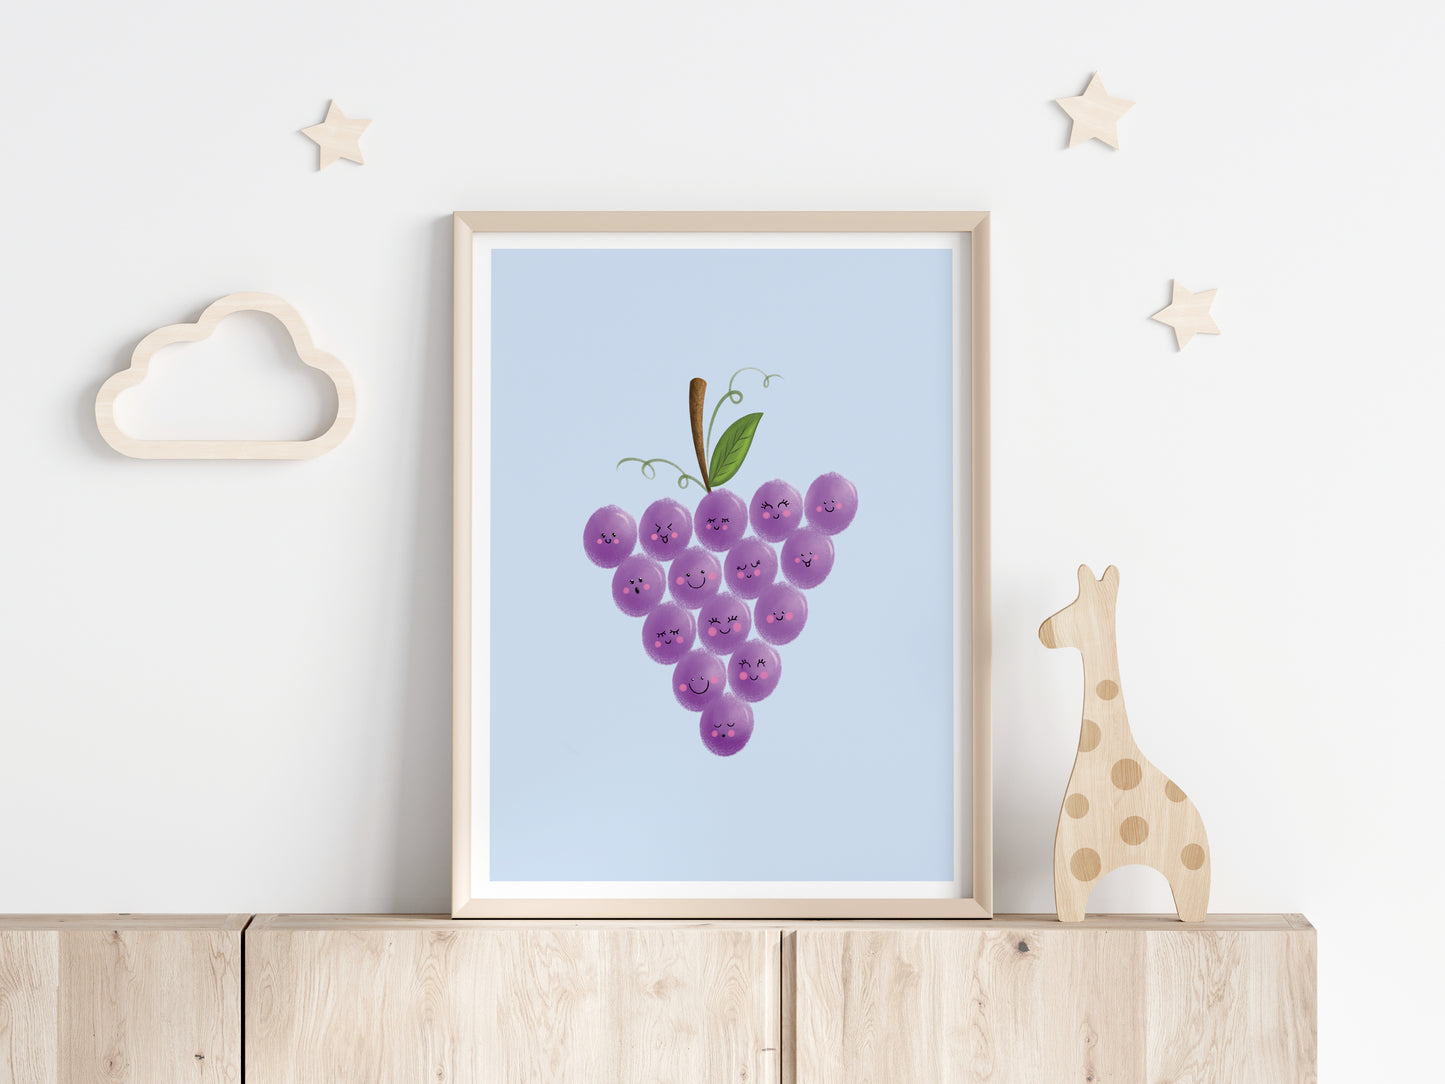 Grapes Art Print